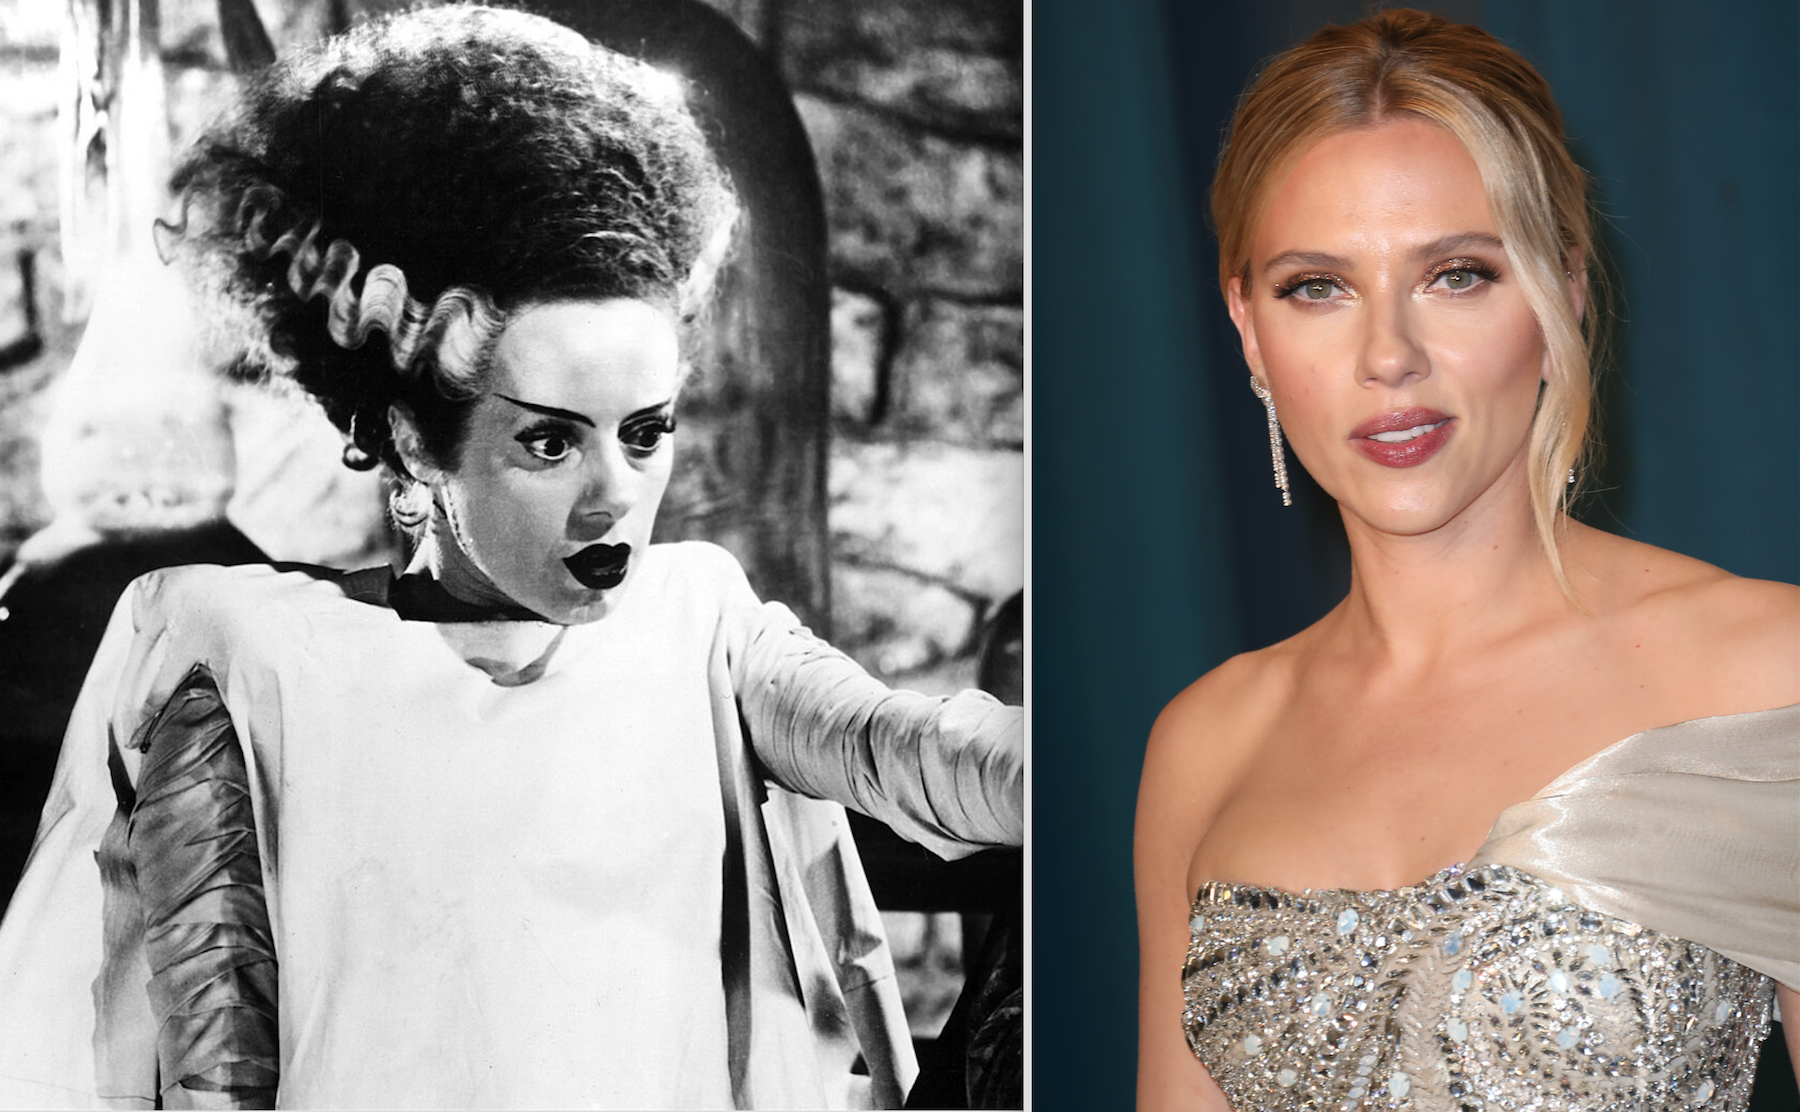 Scarlett Johansson Movies: Latest and Upcoming Films of Scarlett